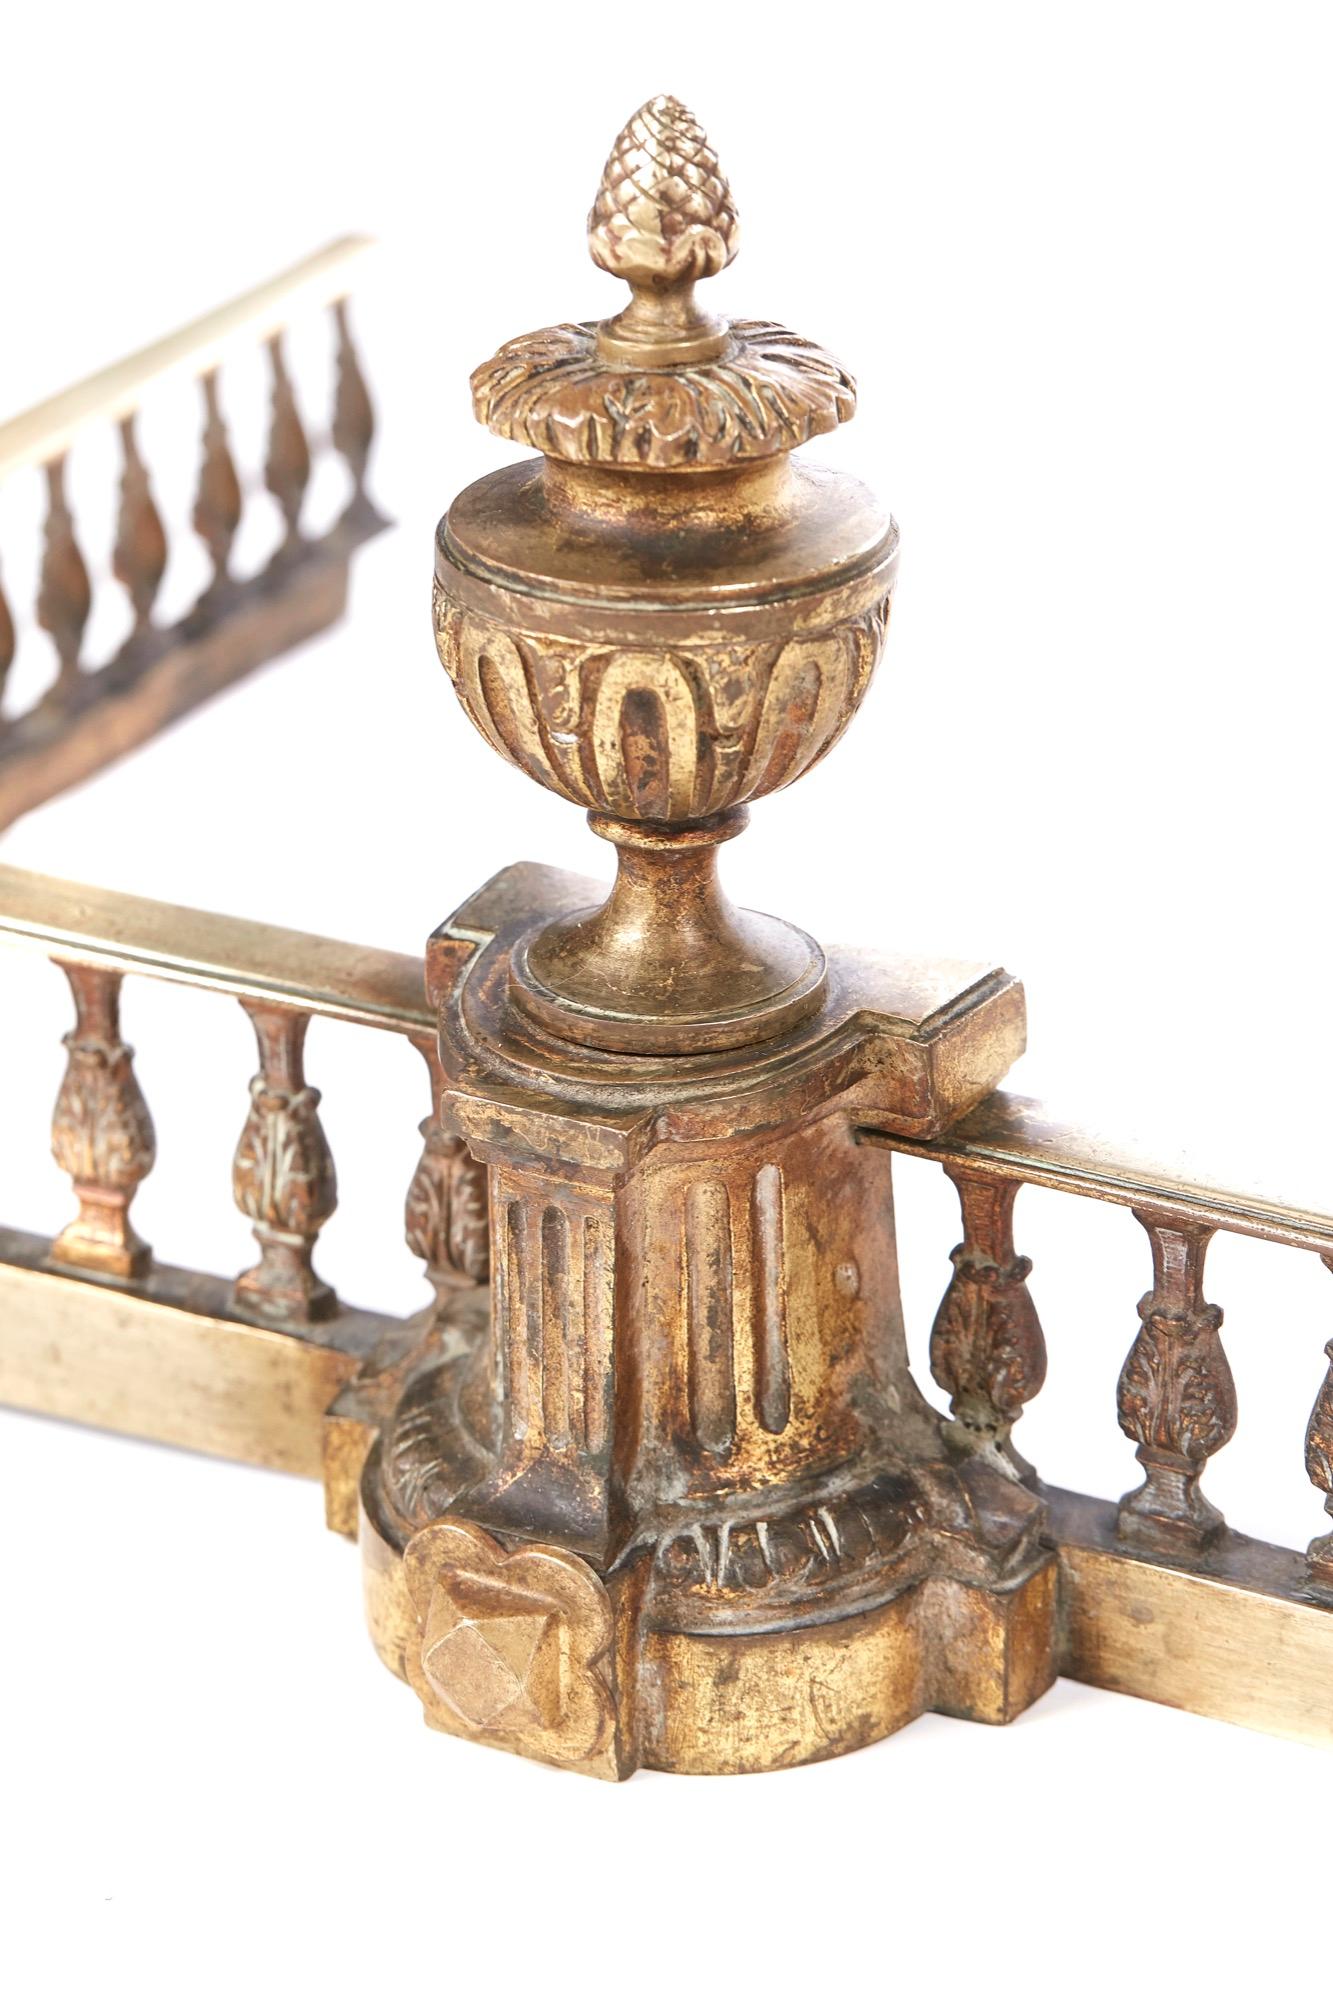 Ornate antique Victorian brass fender having lovely ornate brass urns, ornate brass spindles. Nice quality.
Measures: 49